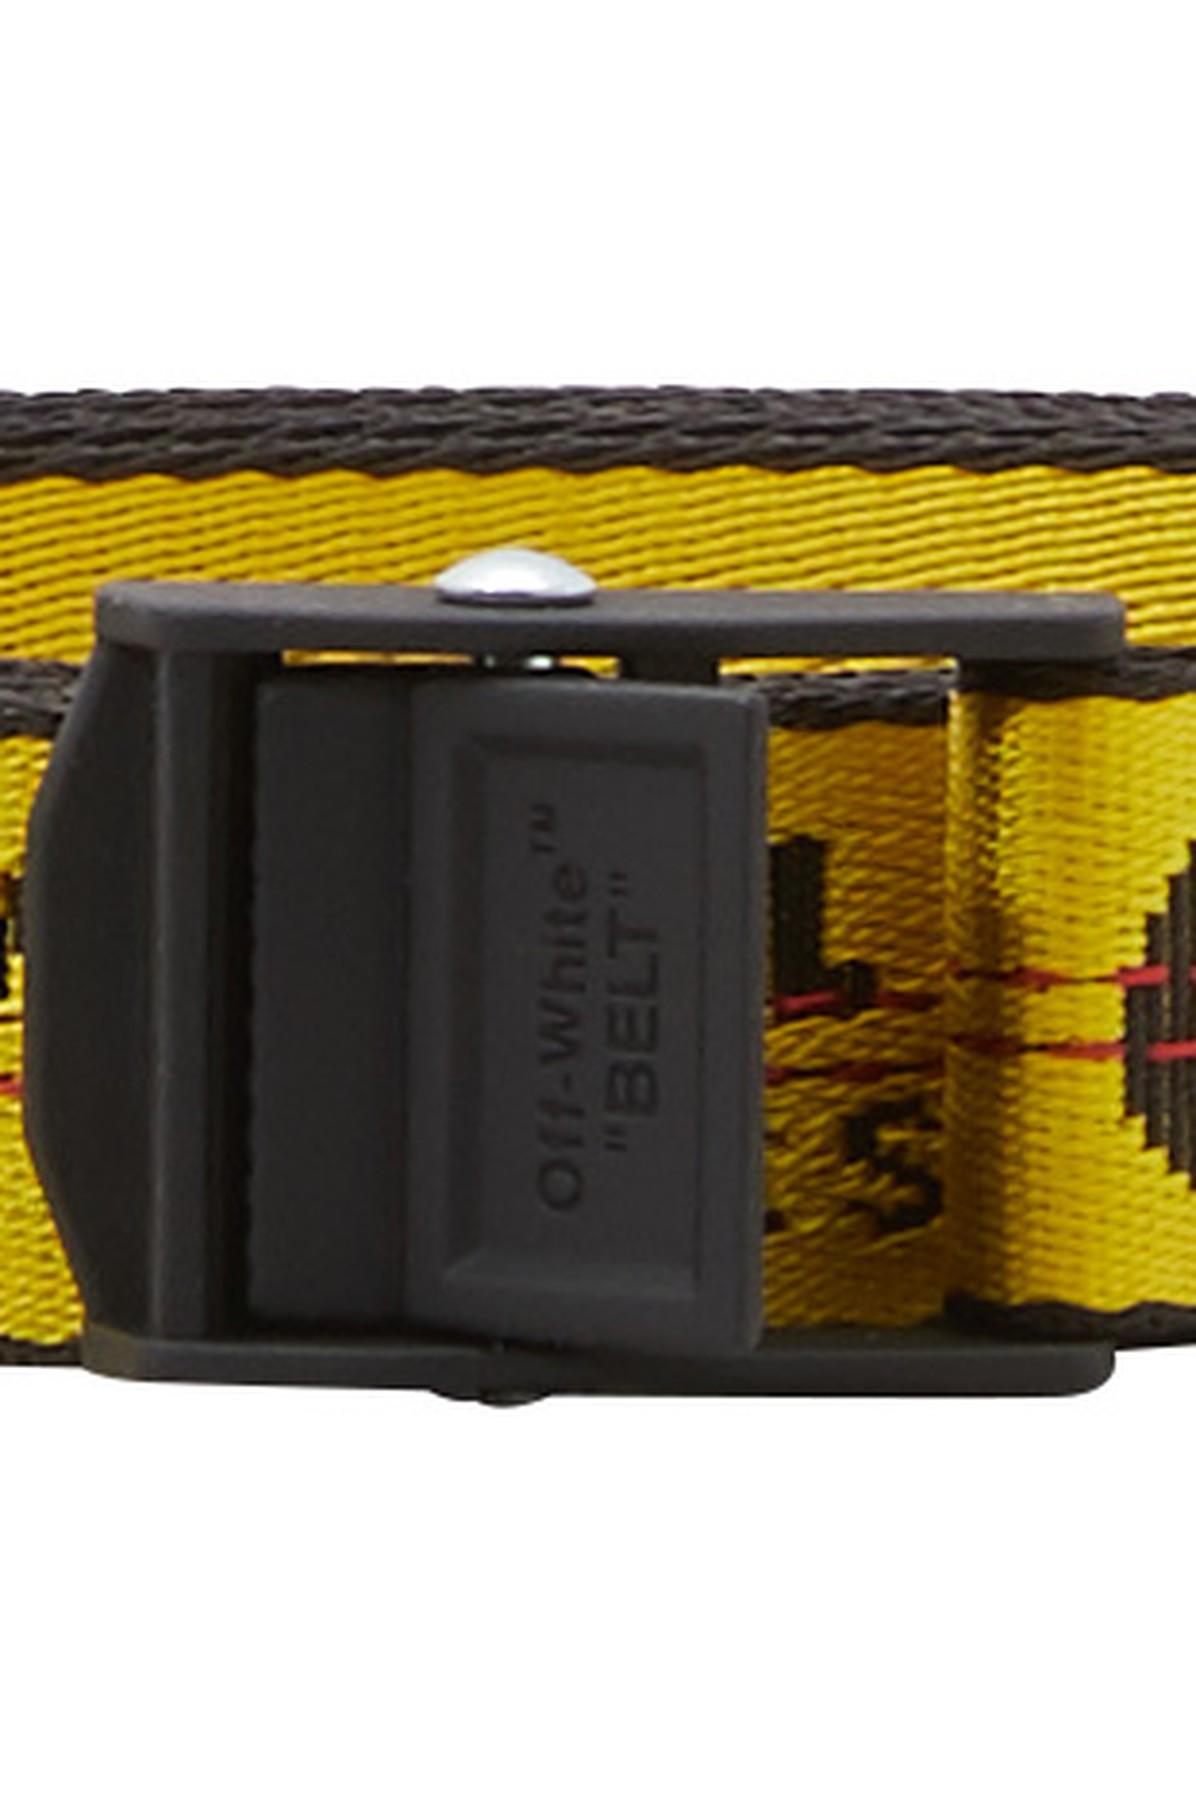 Off-White c/o Virgil Abloh Industrial Mini Belt in Yellow - Lyst